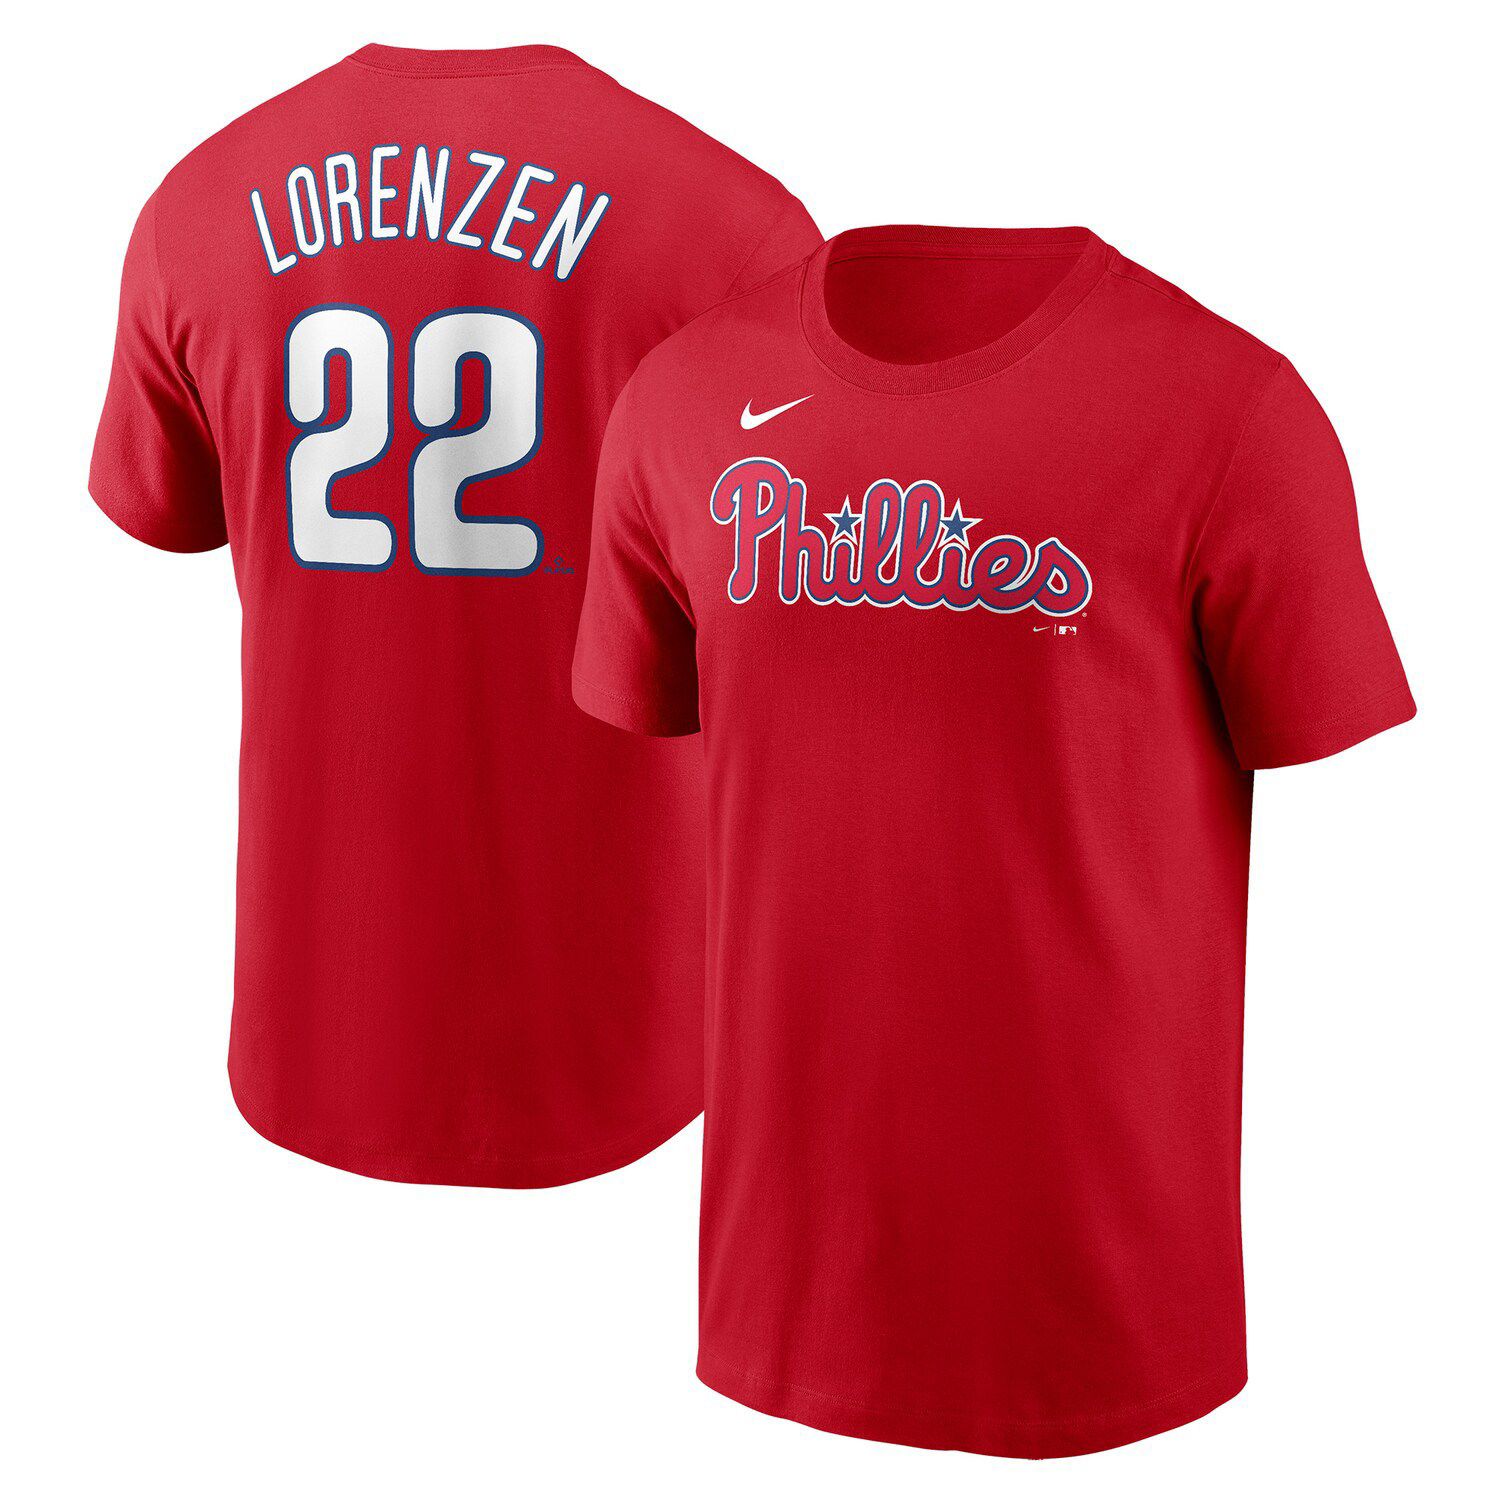 Phillies player jersey merchandise